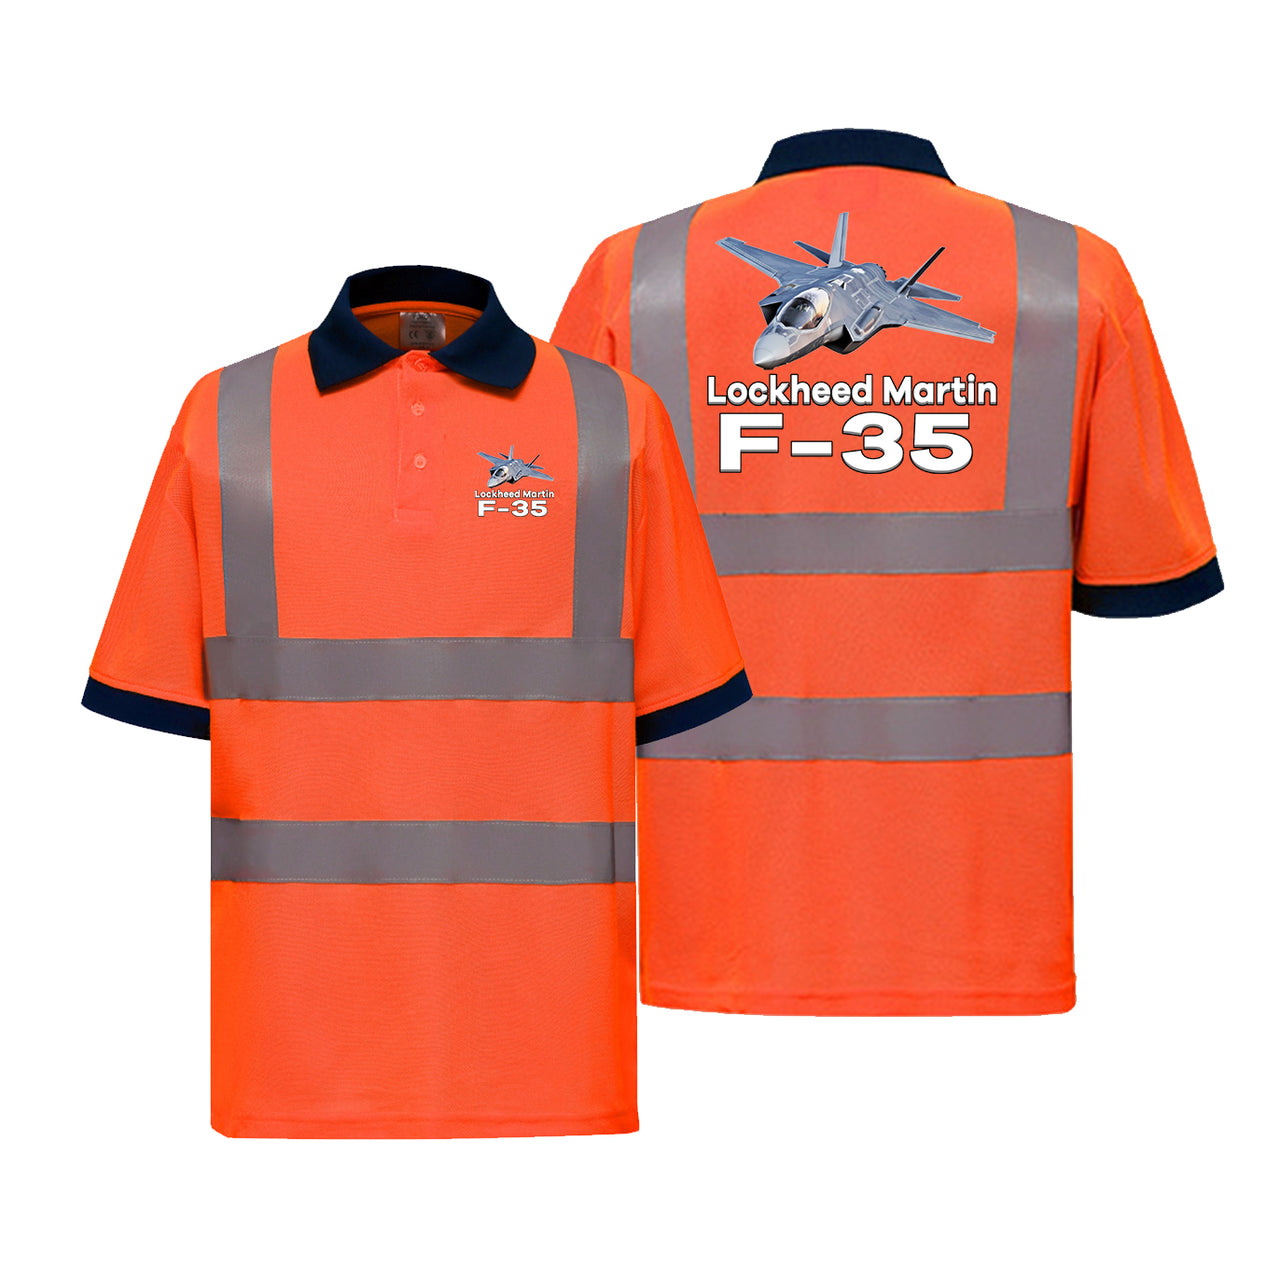 The Lockheed Martin F35 Designed Reflective Polo T-Shirts